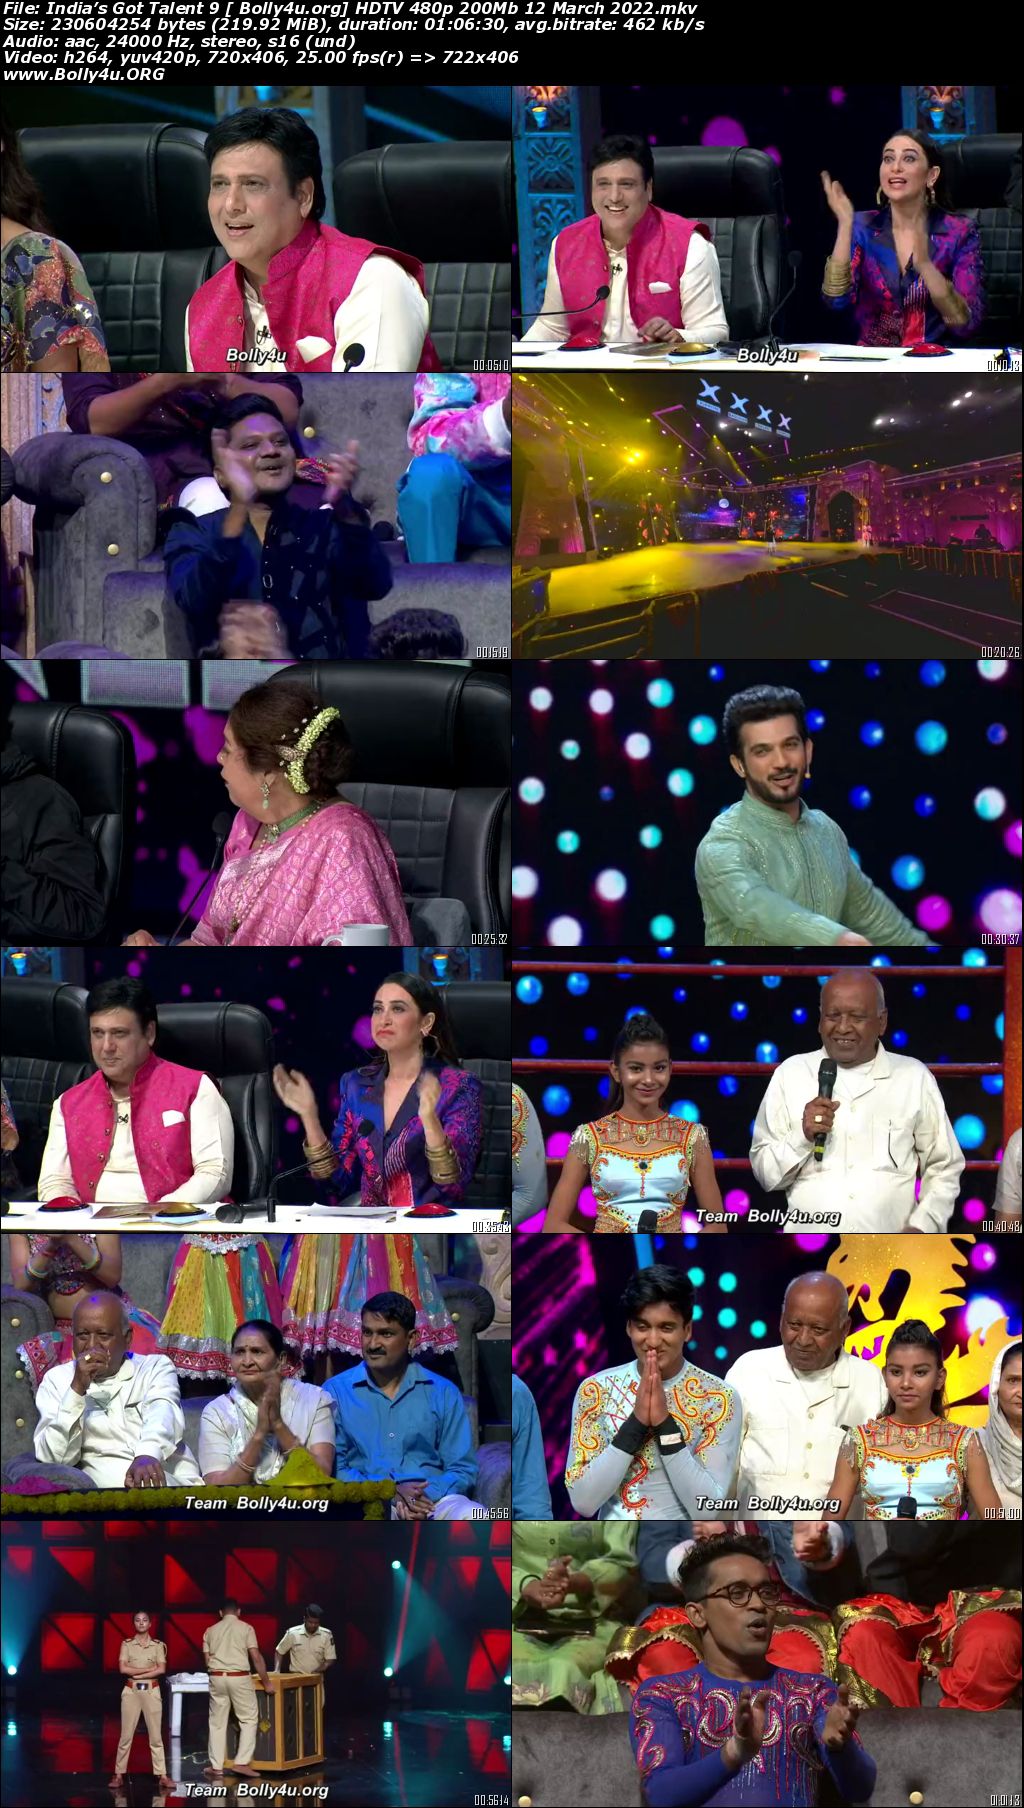 Indias Got Talent 9 HDTV 480p 200Mb 12 March 2022 Download